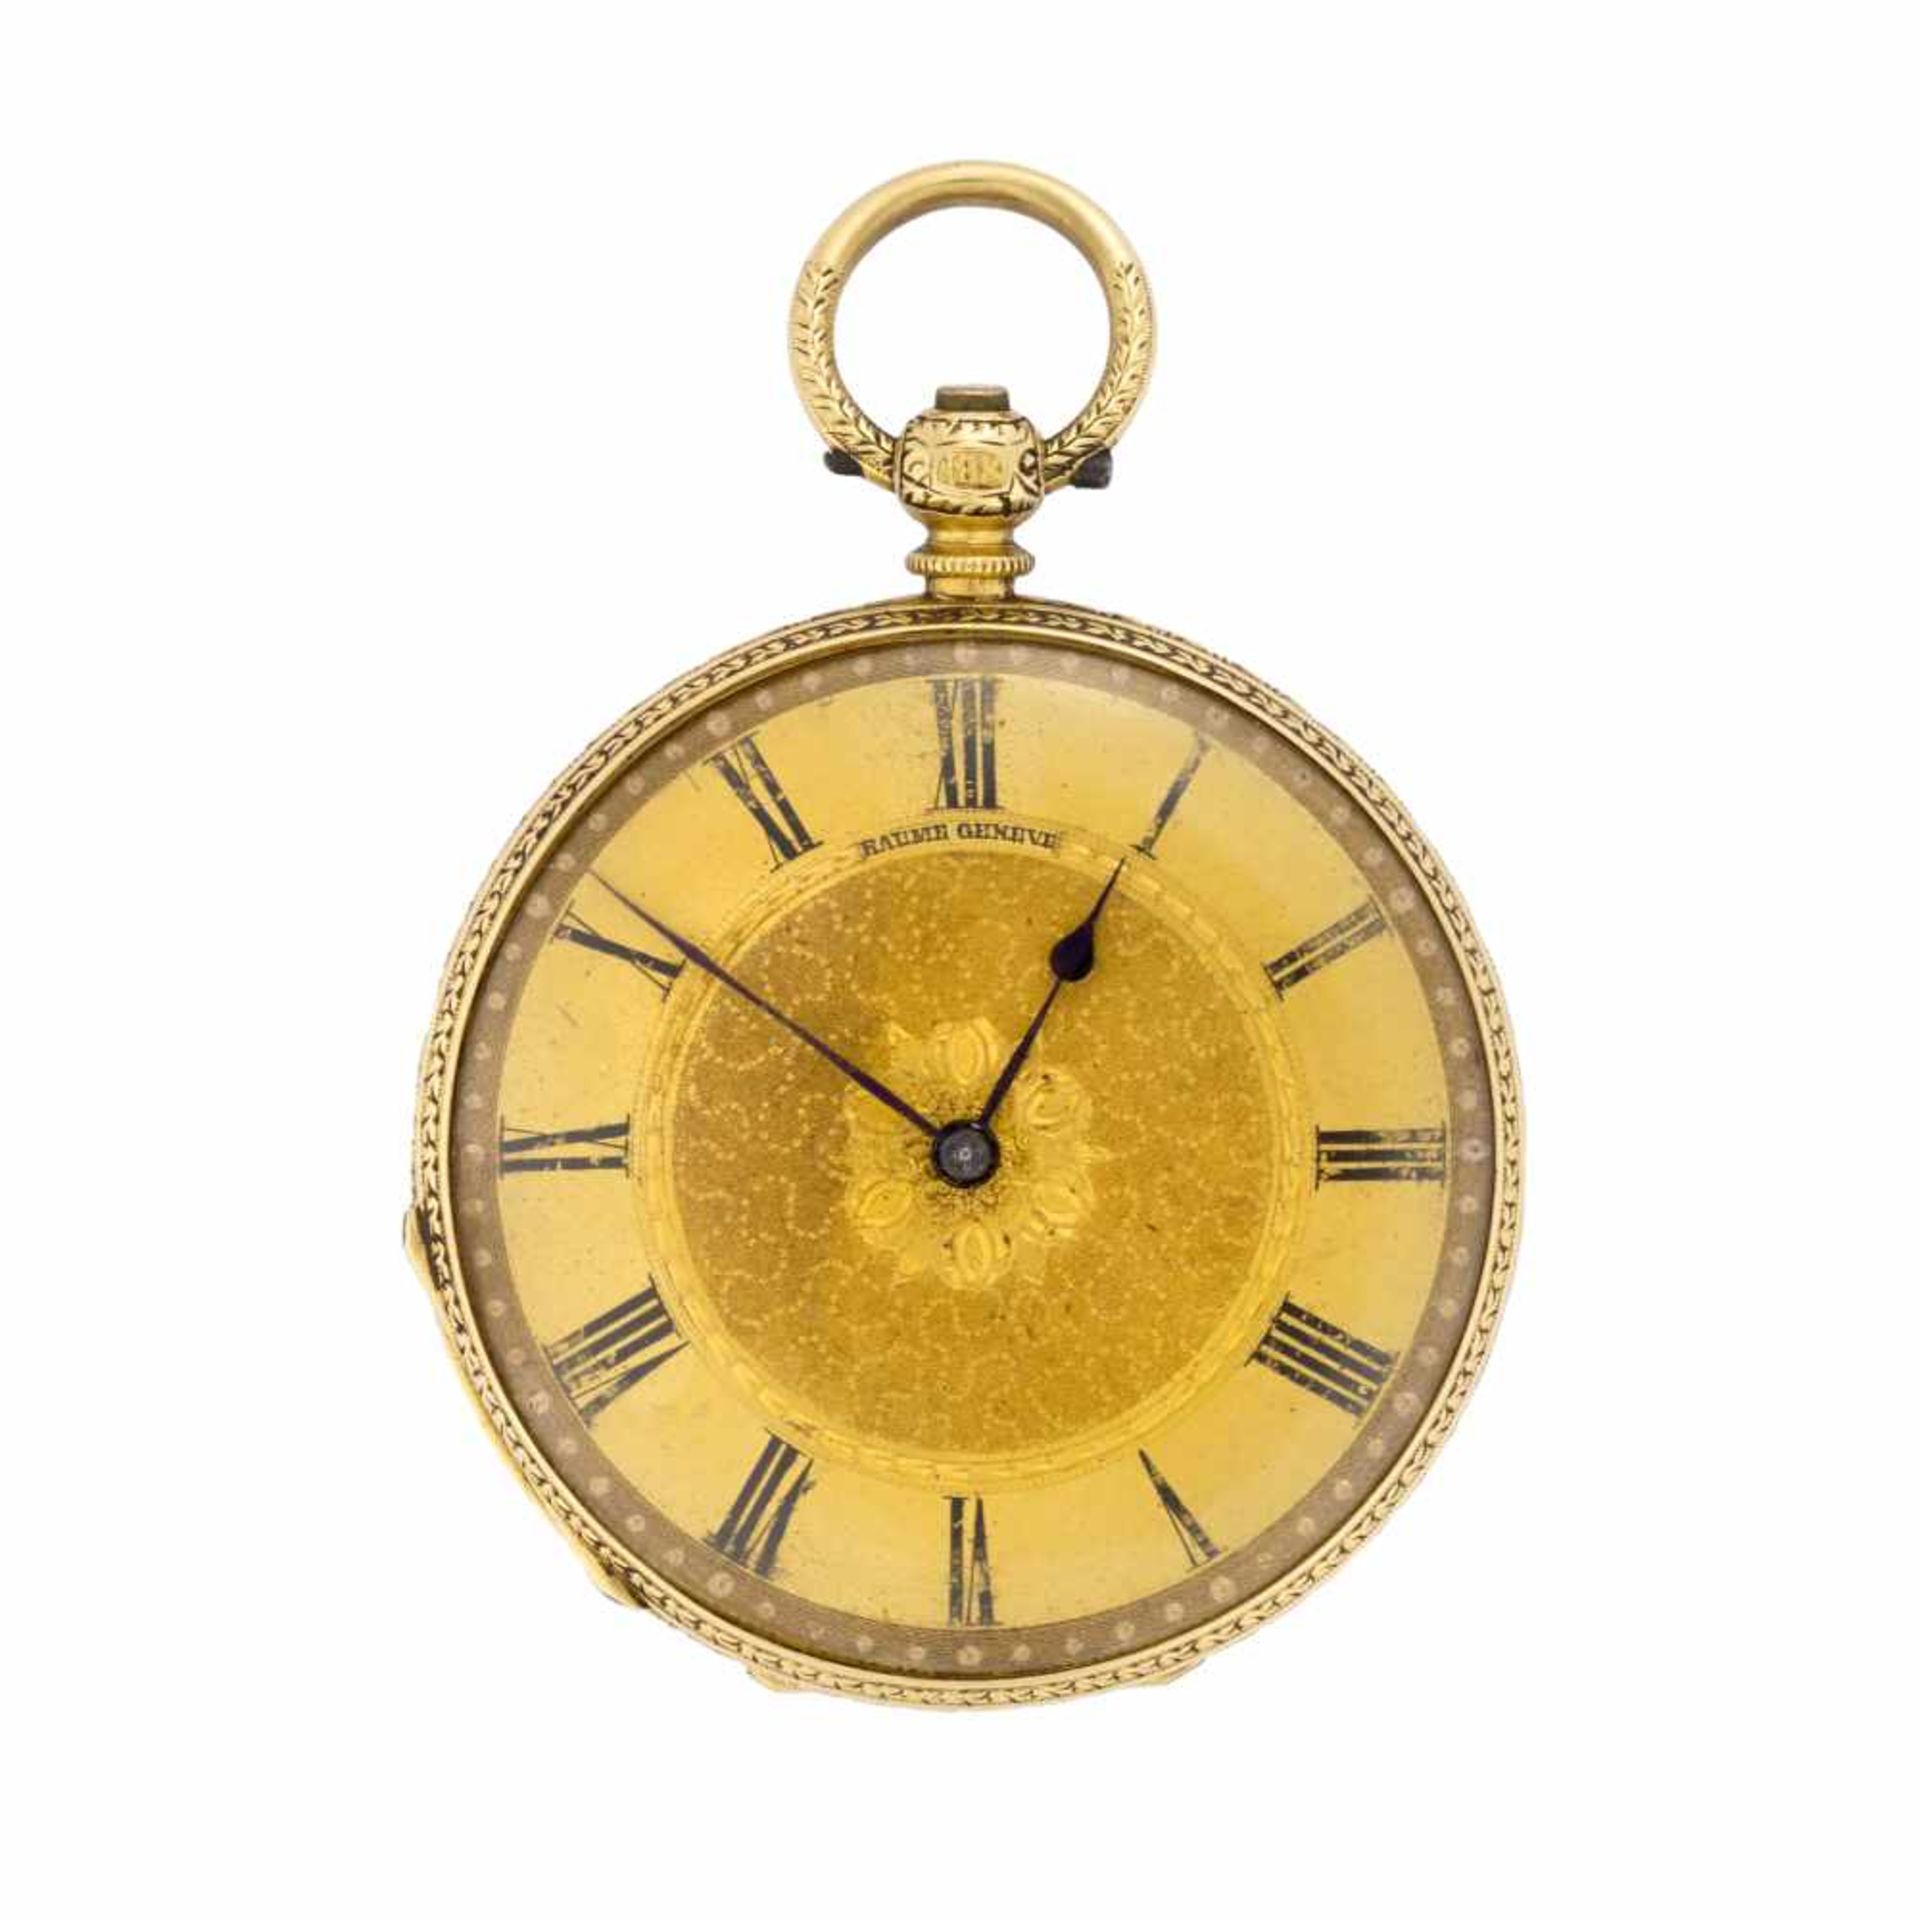 JOHN HARVEY18K gold pocket watch with guillochè enamelHalf 19th centuryCase signedKey-wind